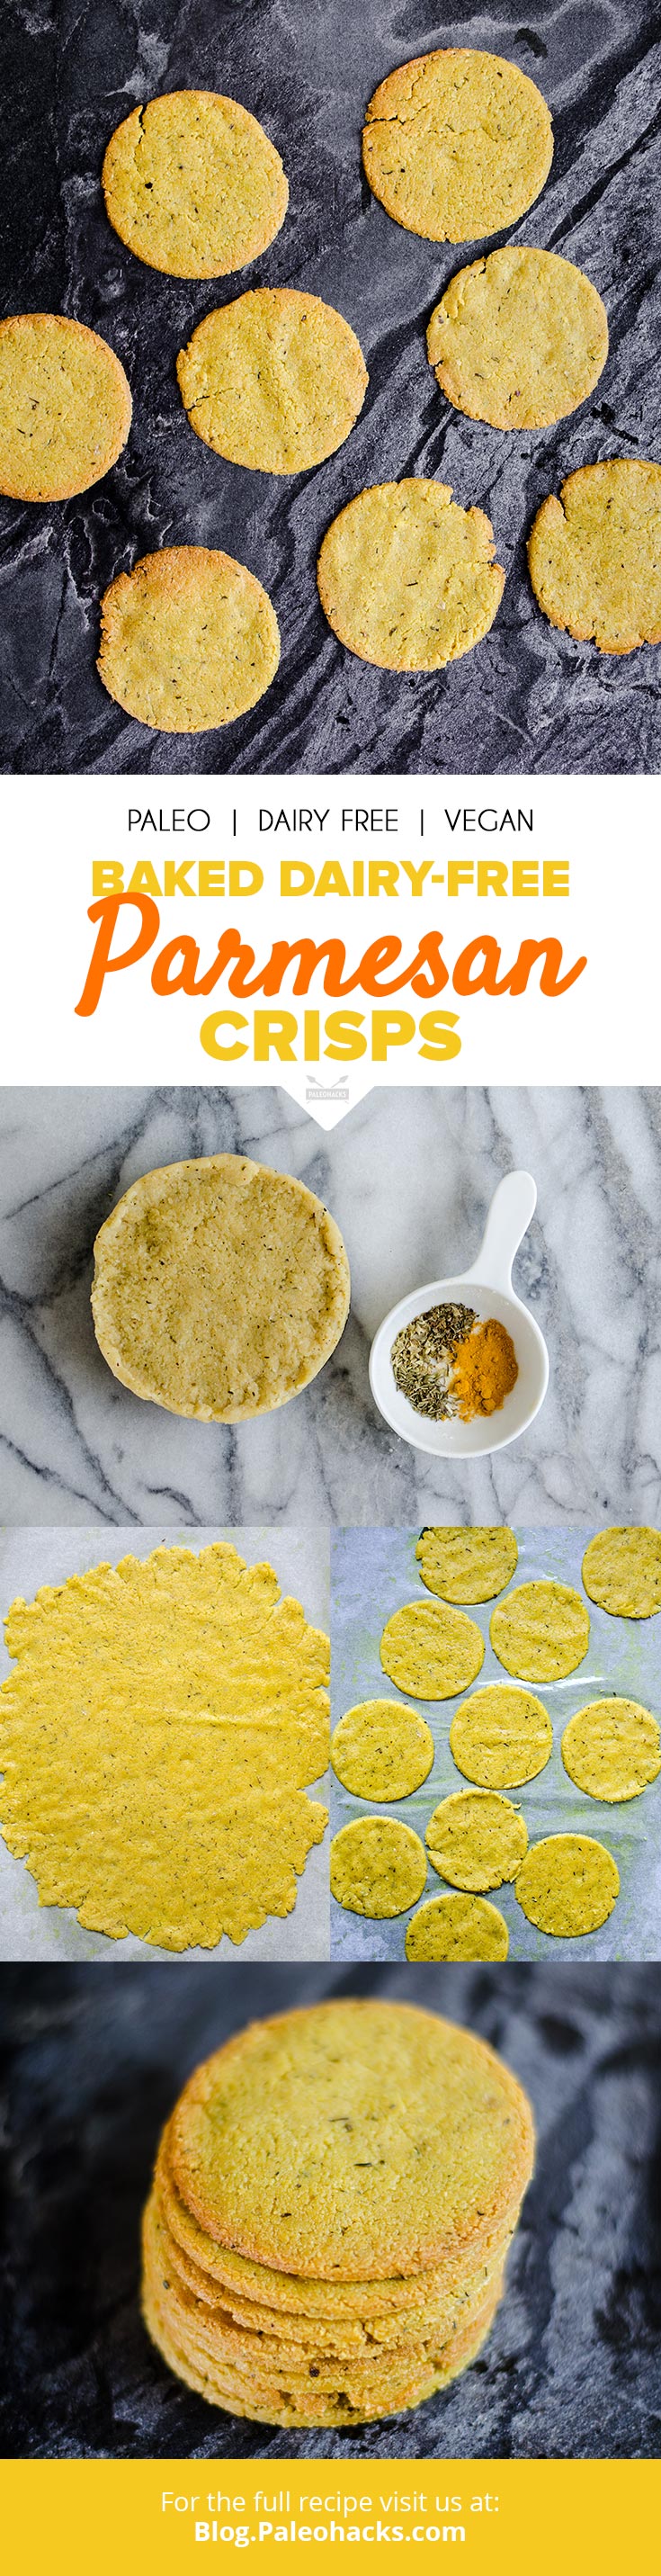 How to make parmesan crisps 